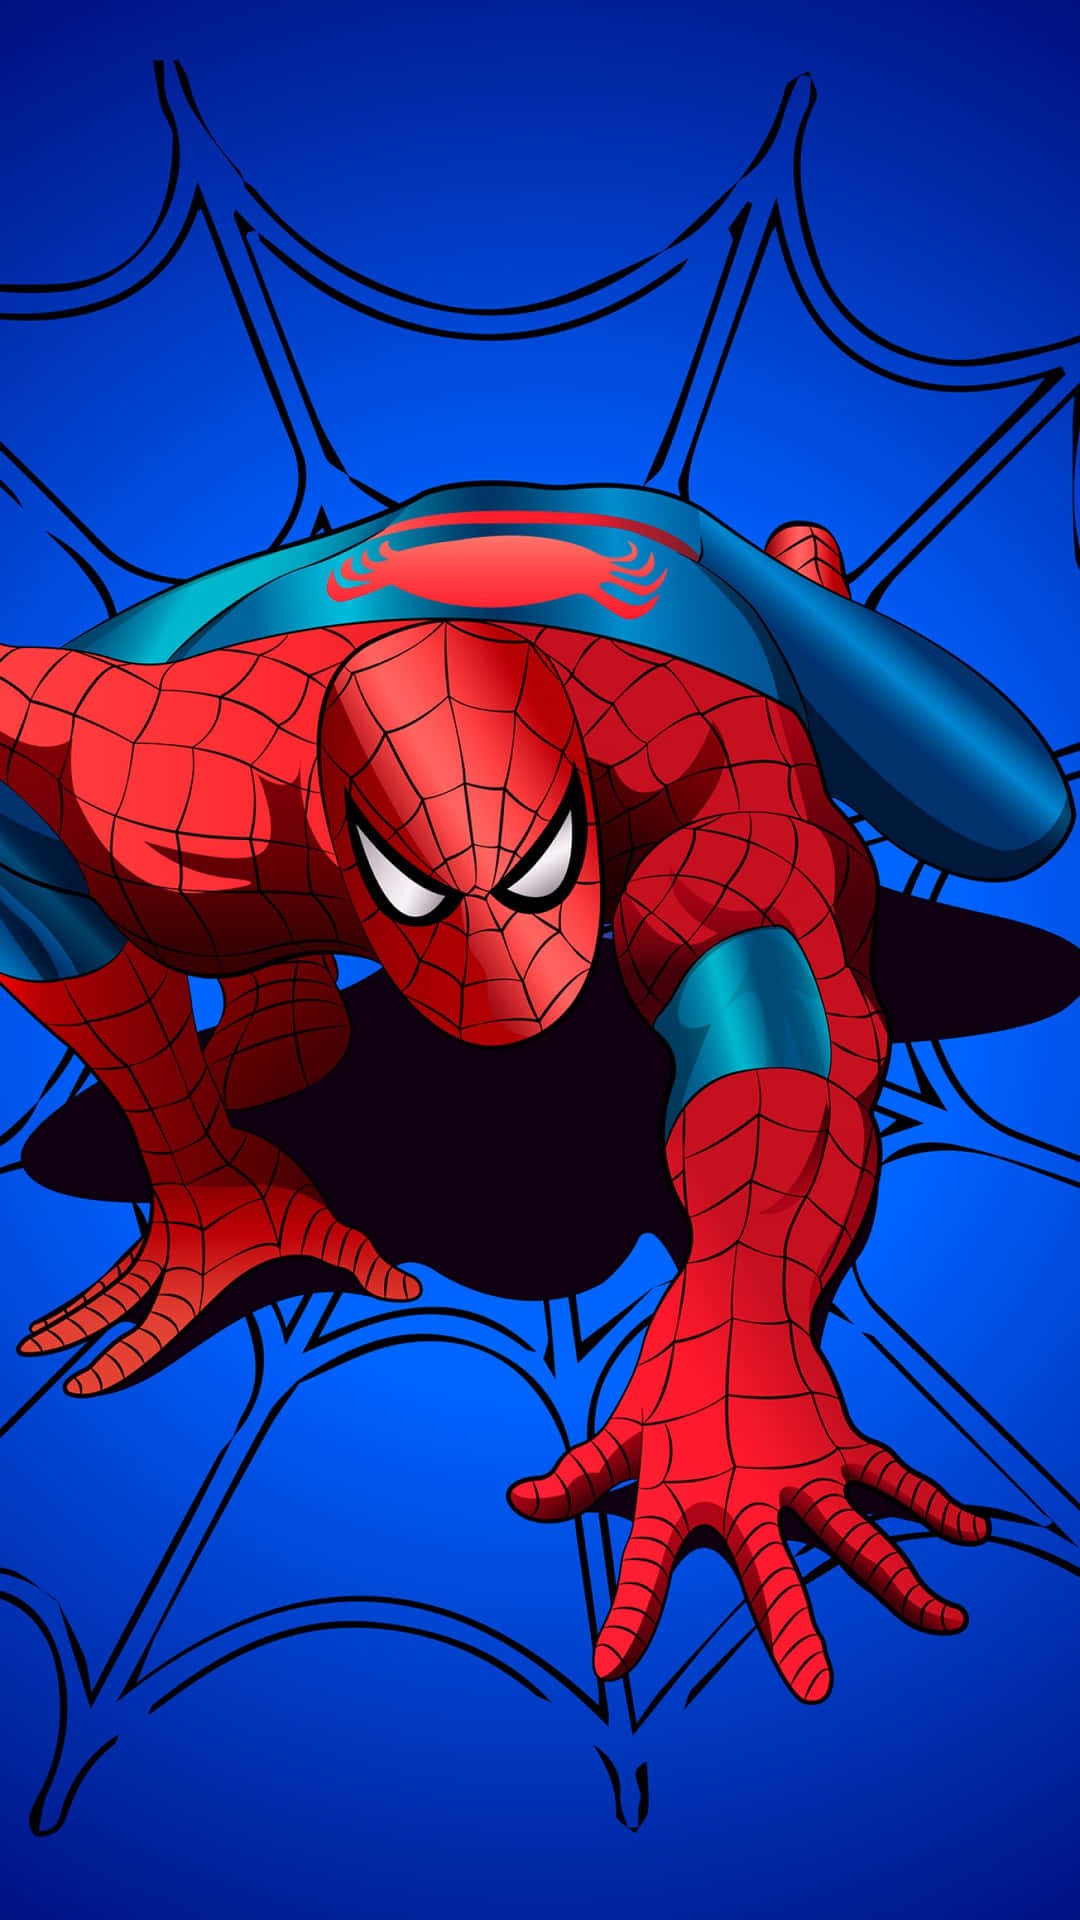 "Spiderman Swinging Into Action"